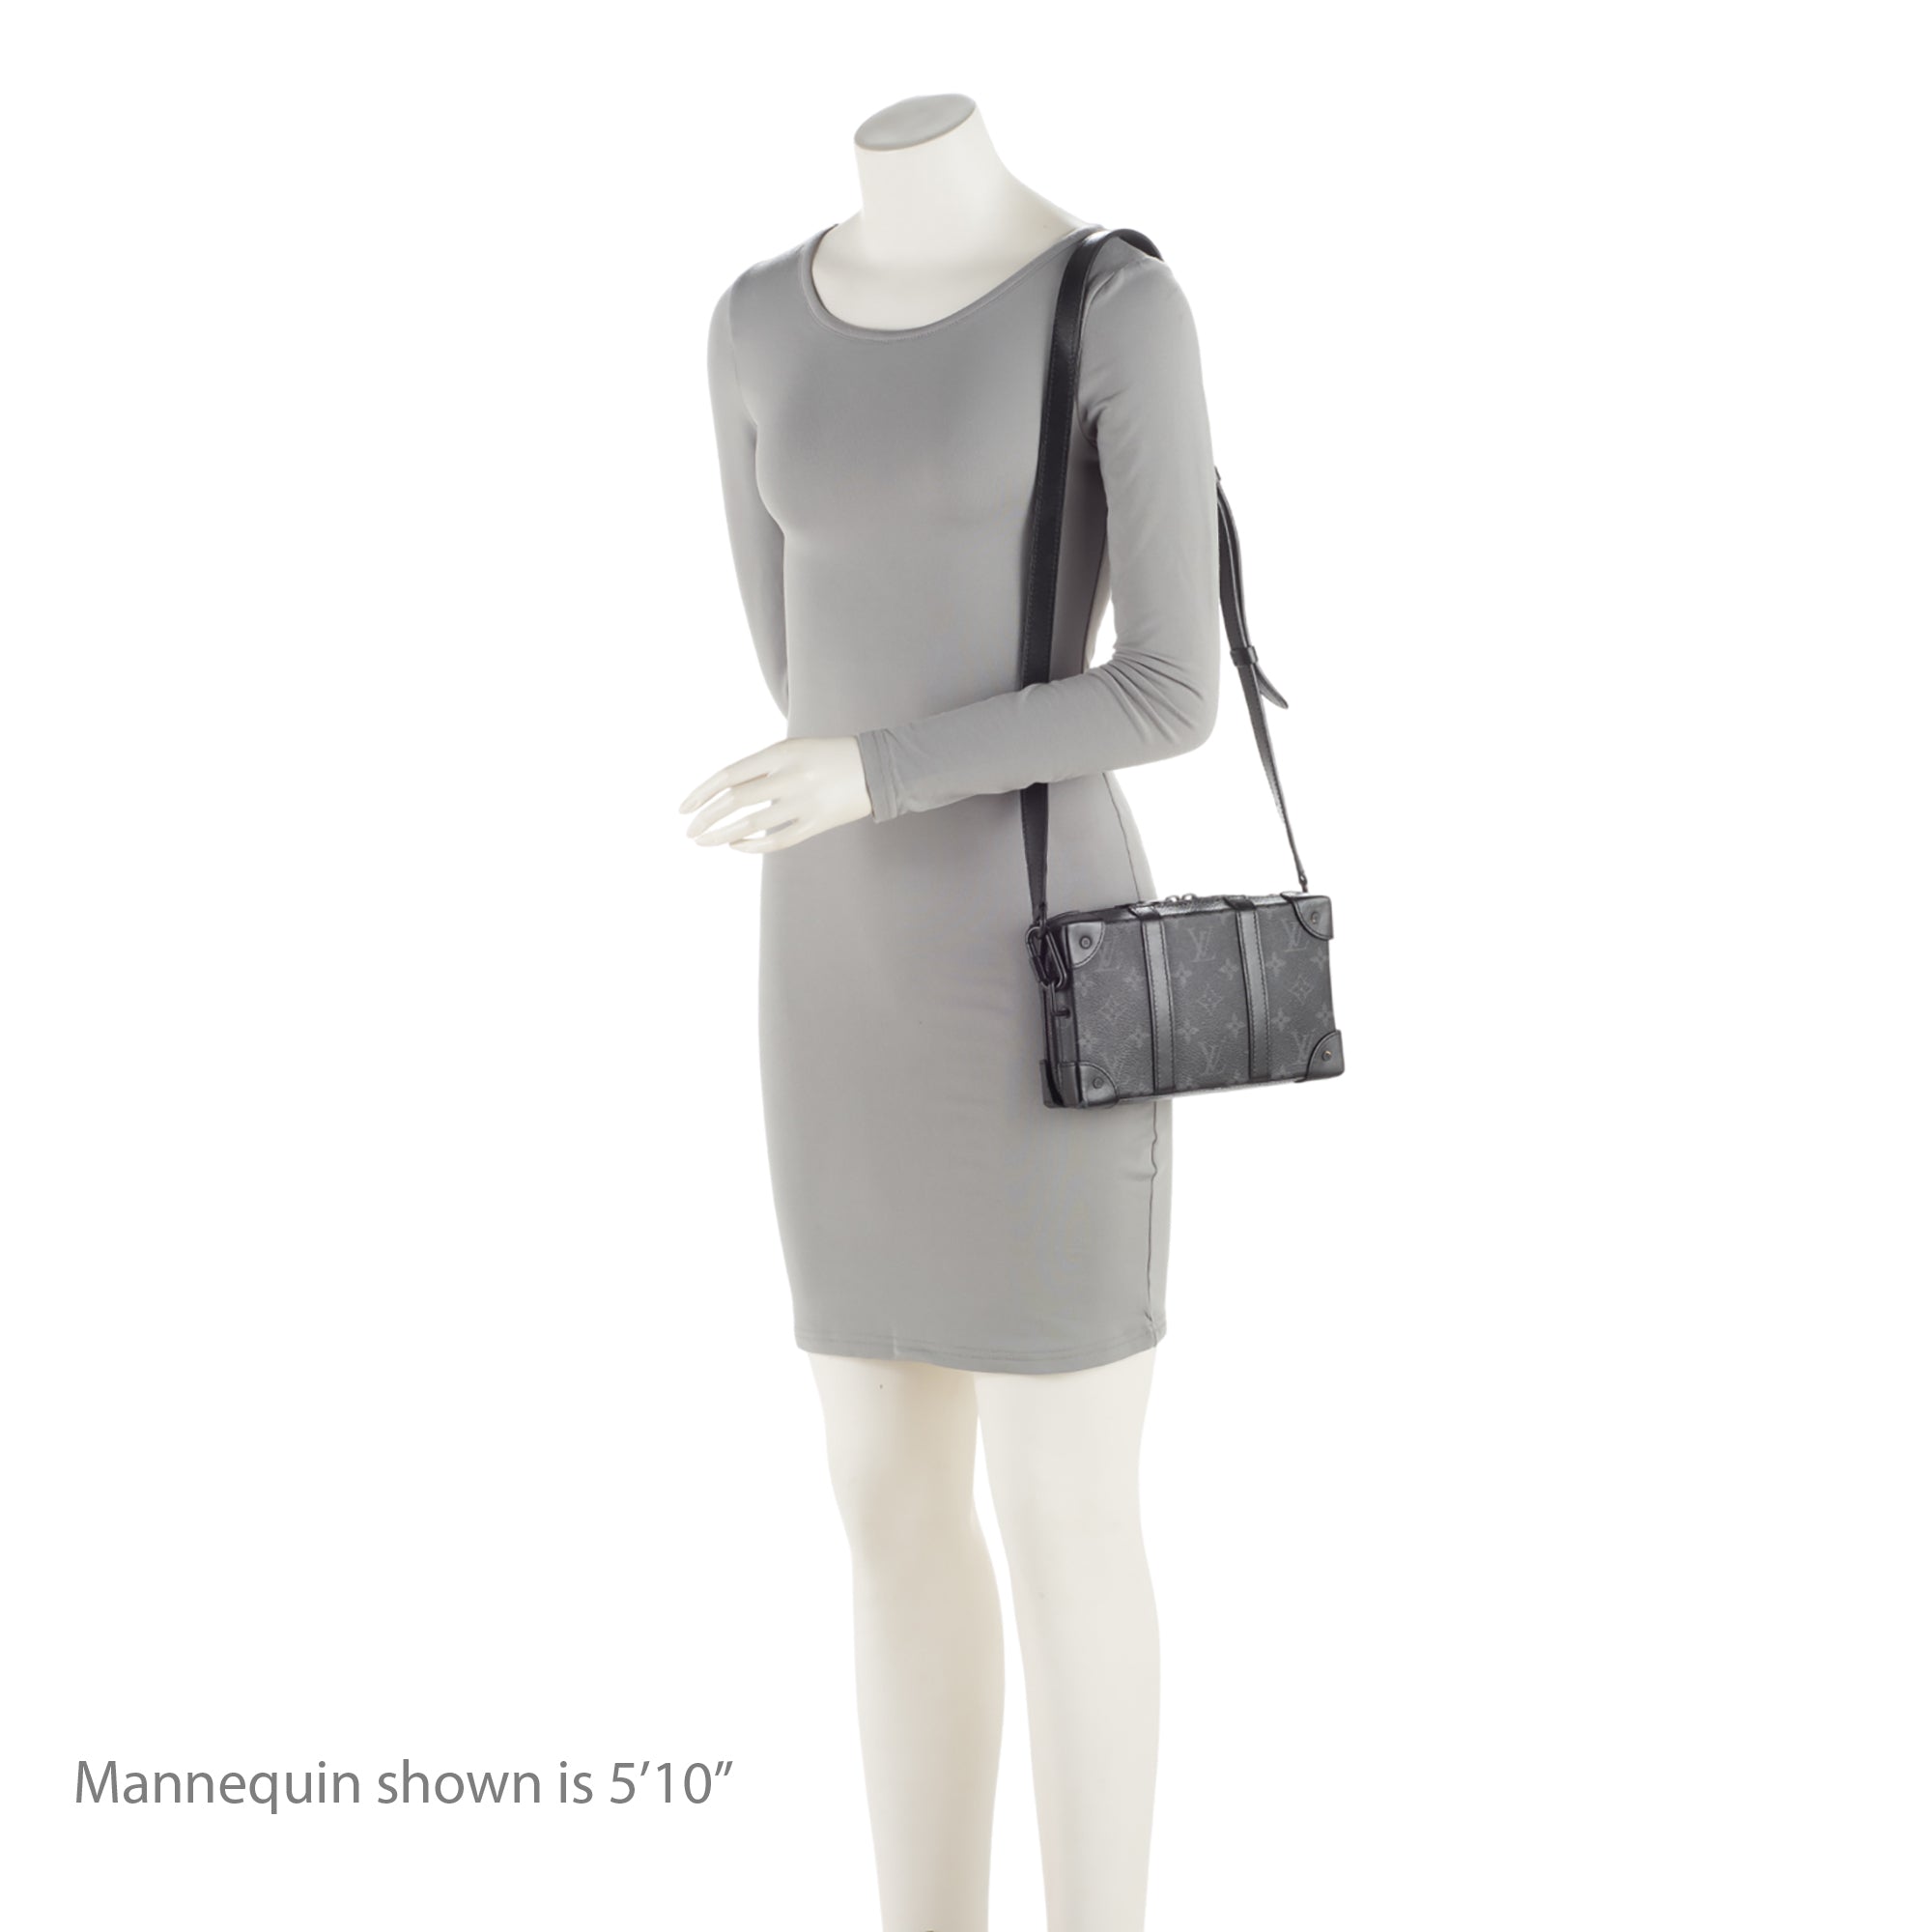 Louis Vuitton Monogram Eclipse Soft Trunk Crossbody Bag